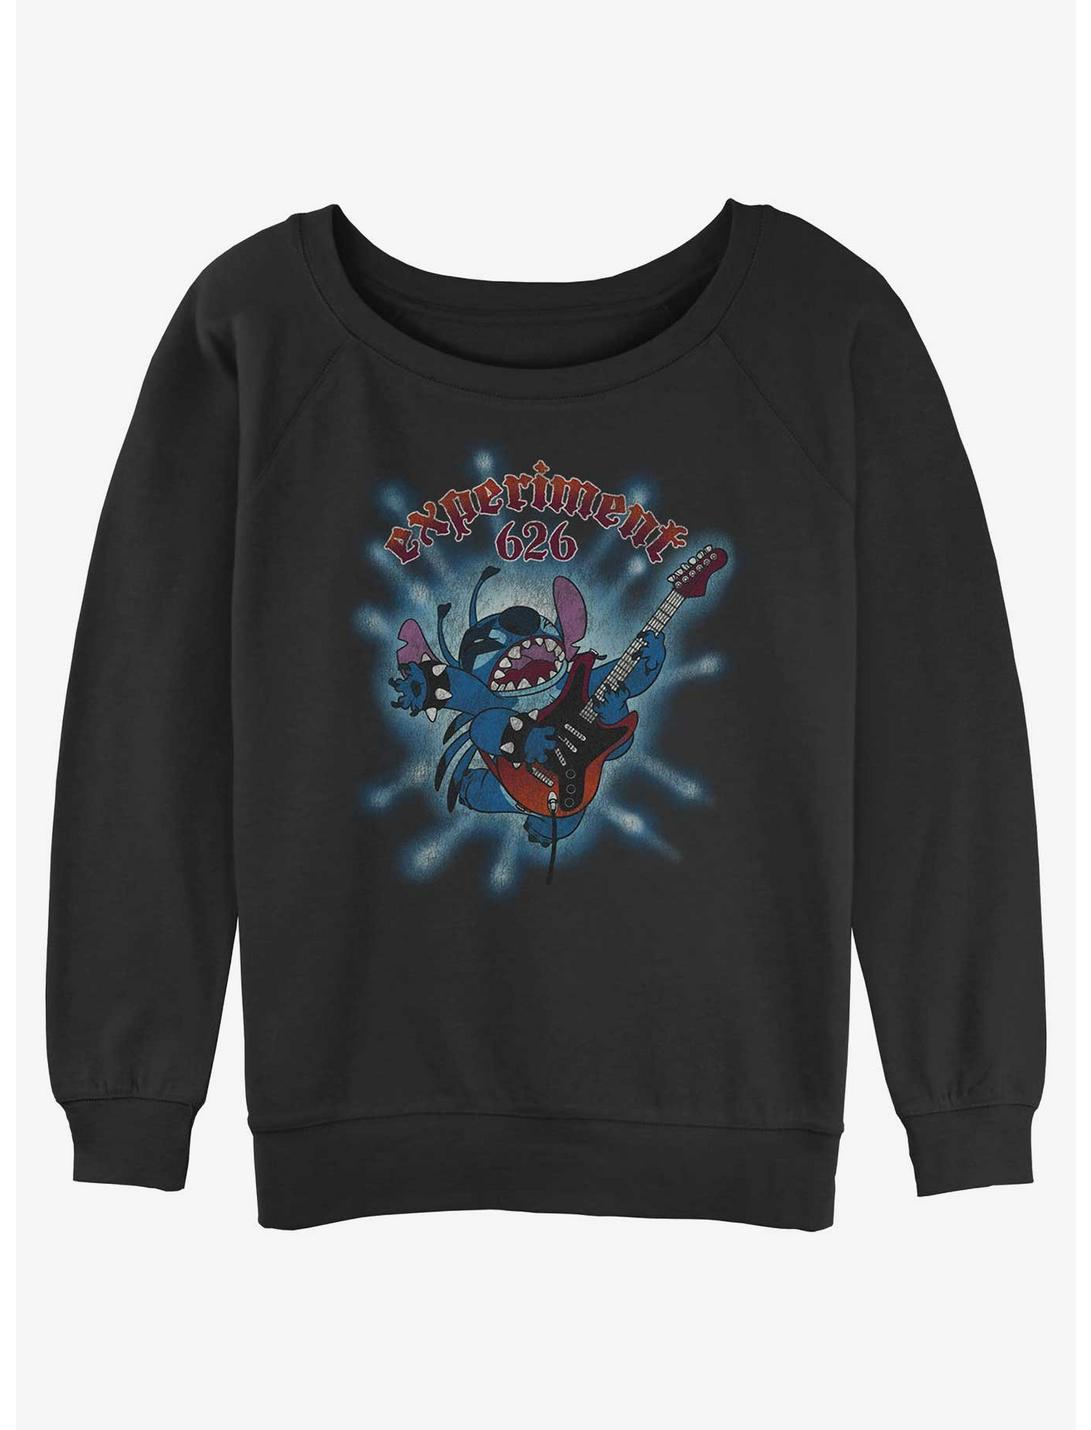 Disney Lilo & Stitch Rock Out Experiment 626 Womens Slouchy Sweatshirt, BLACK, hi-res